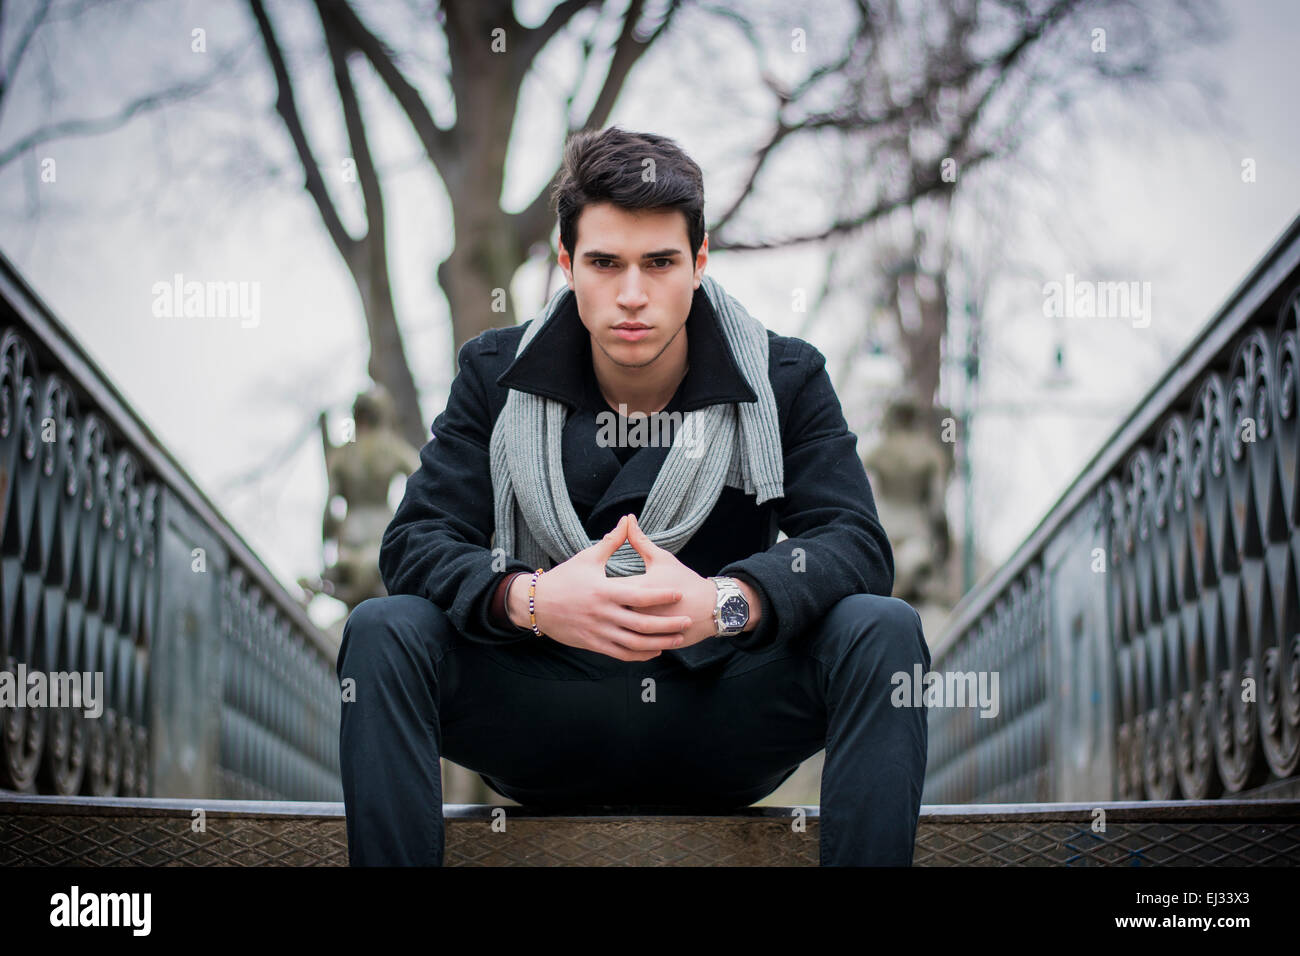 Stylish trendy young man sitting outdoor on old metal bridge or walkway Stock Photo